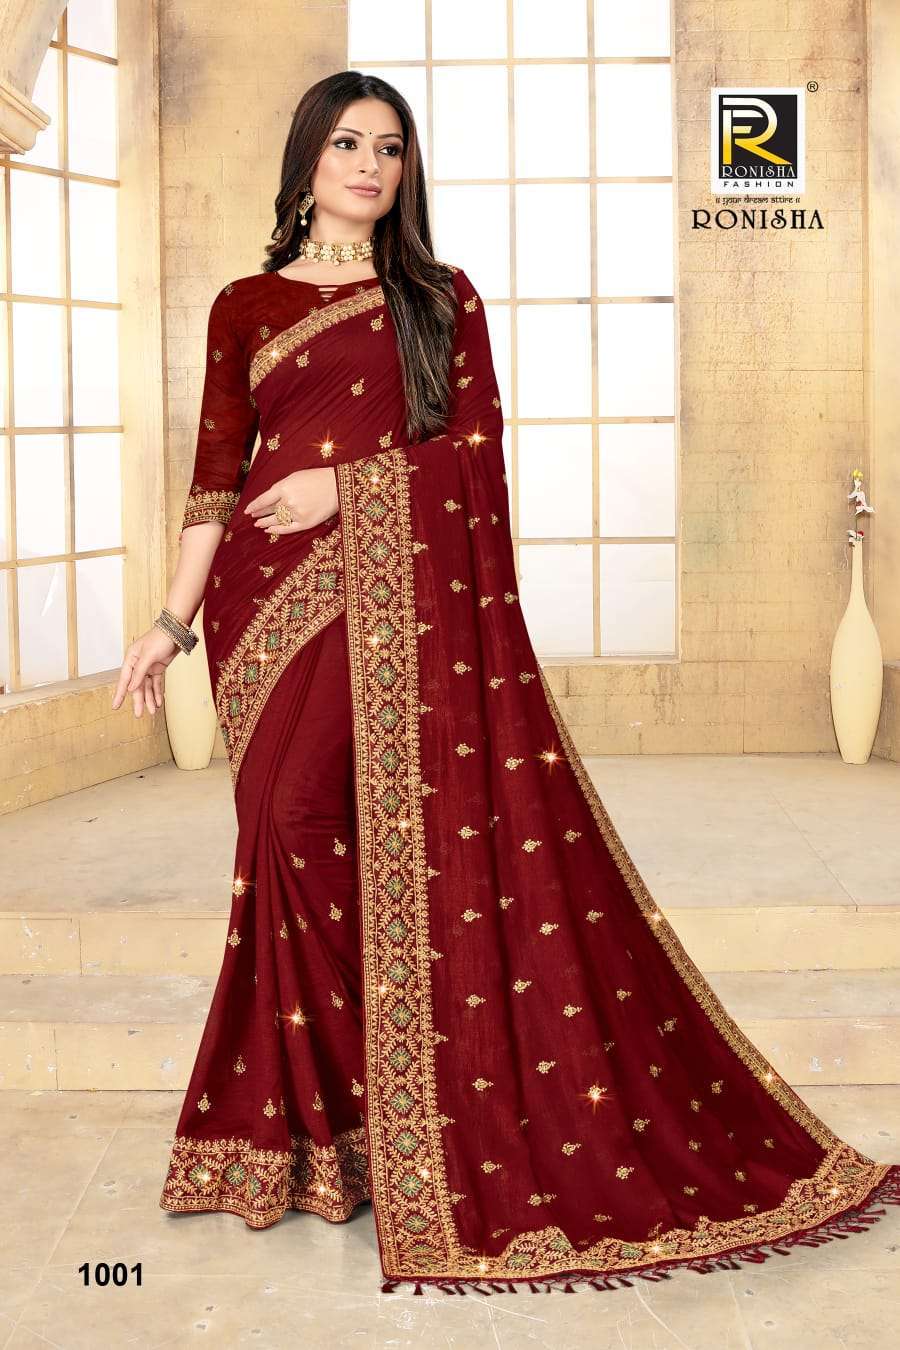 ranjna saree nitya series 1001-1008 vichitra silk saree